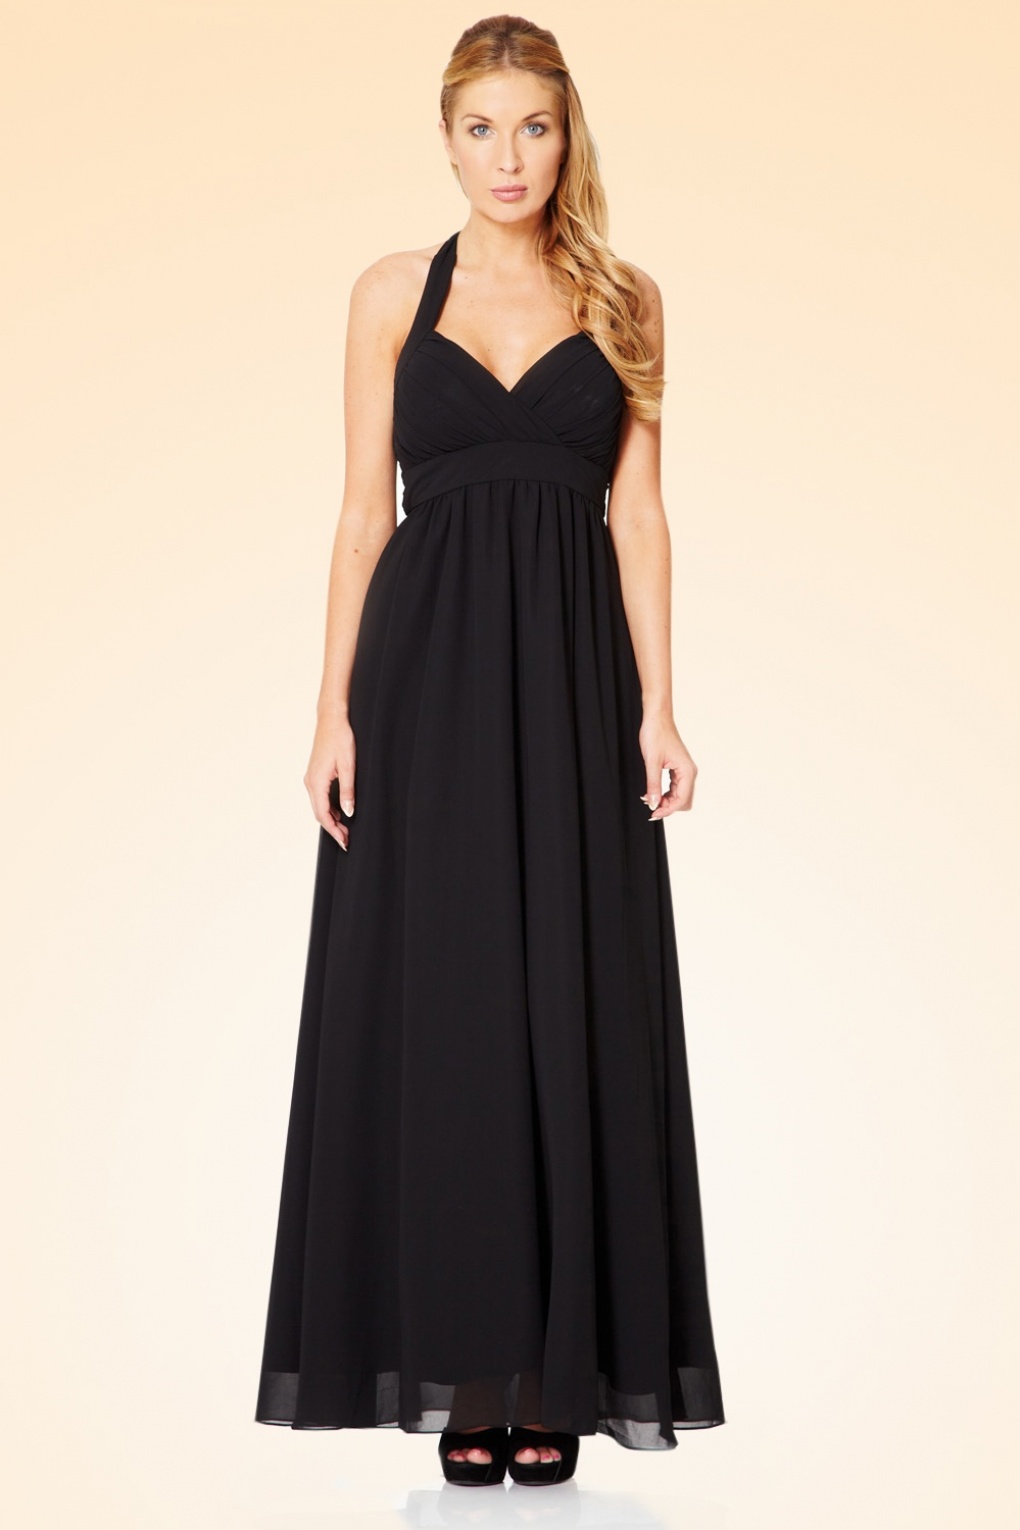 Tallulah Black Maxi Dress